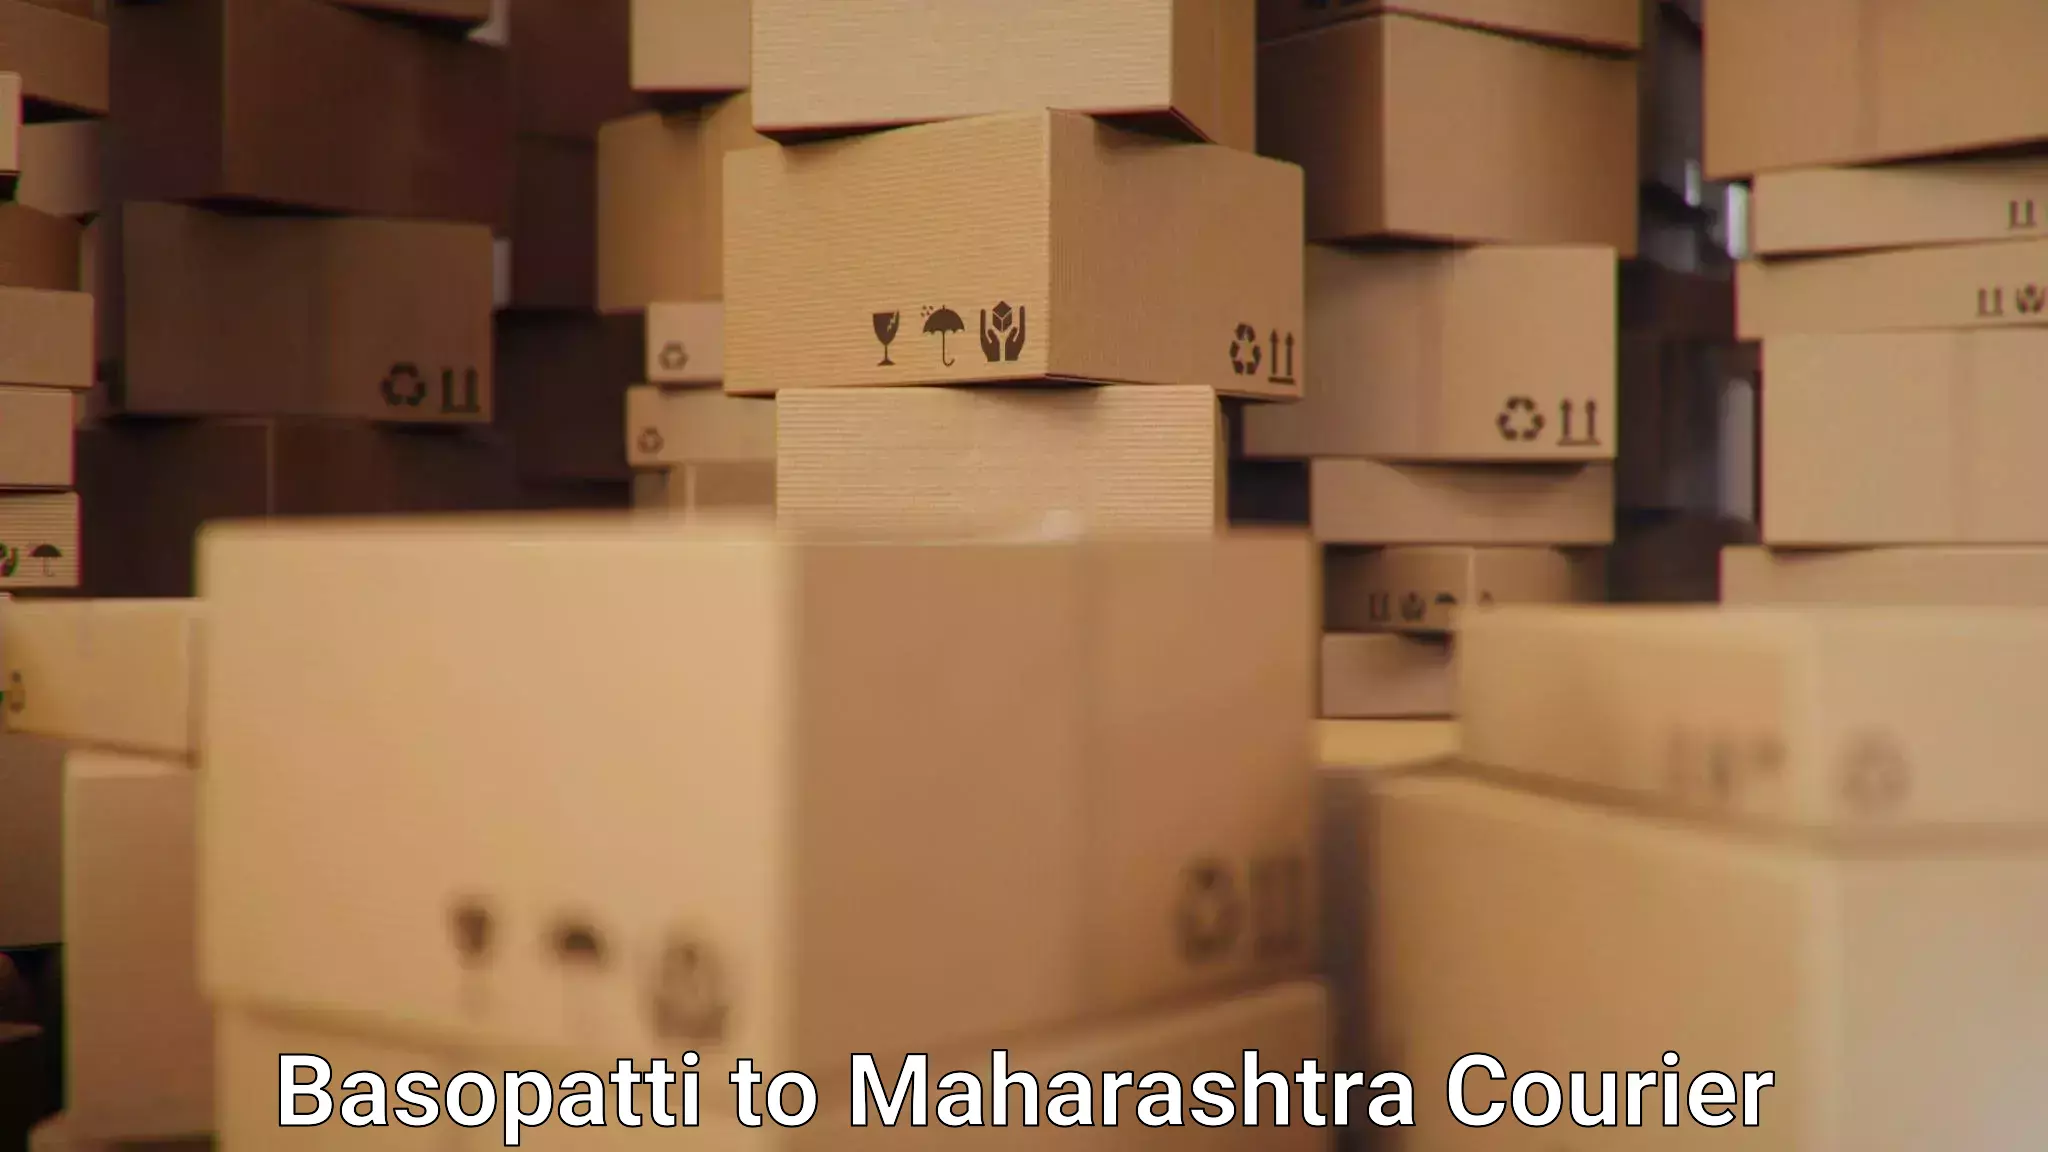 Modern courier technology Basopatti to Maharashtra